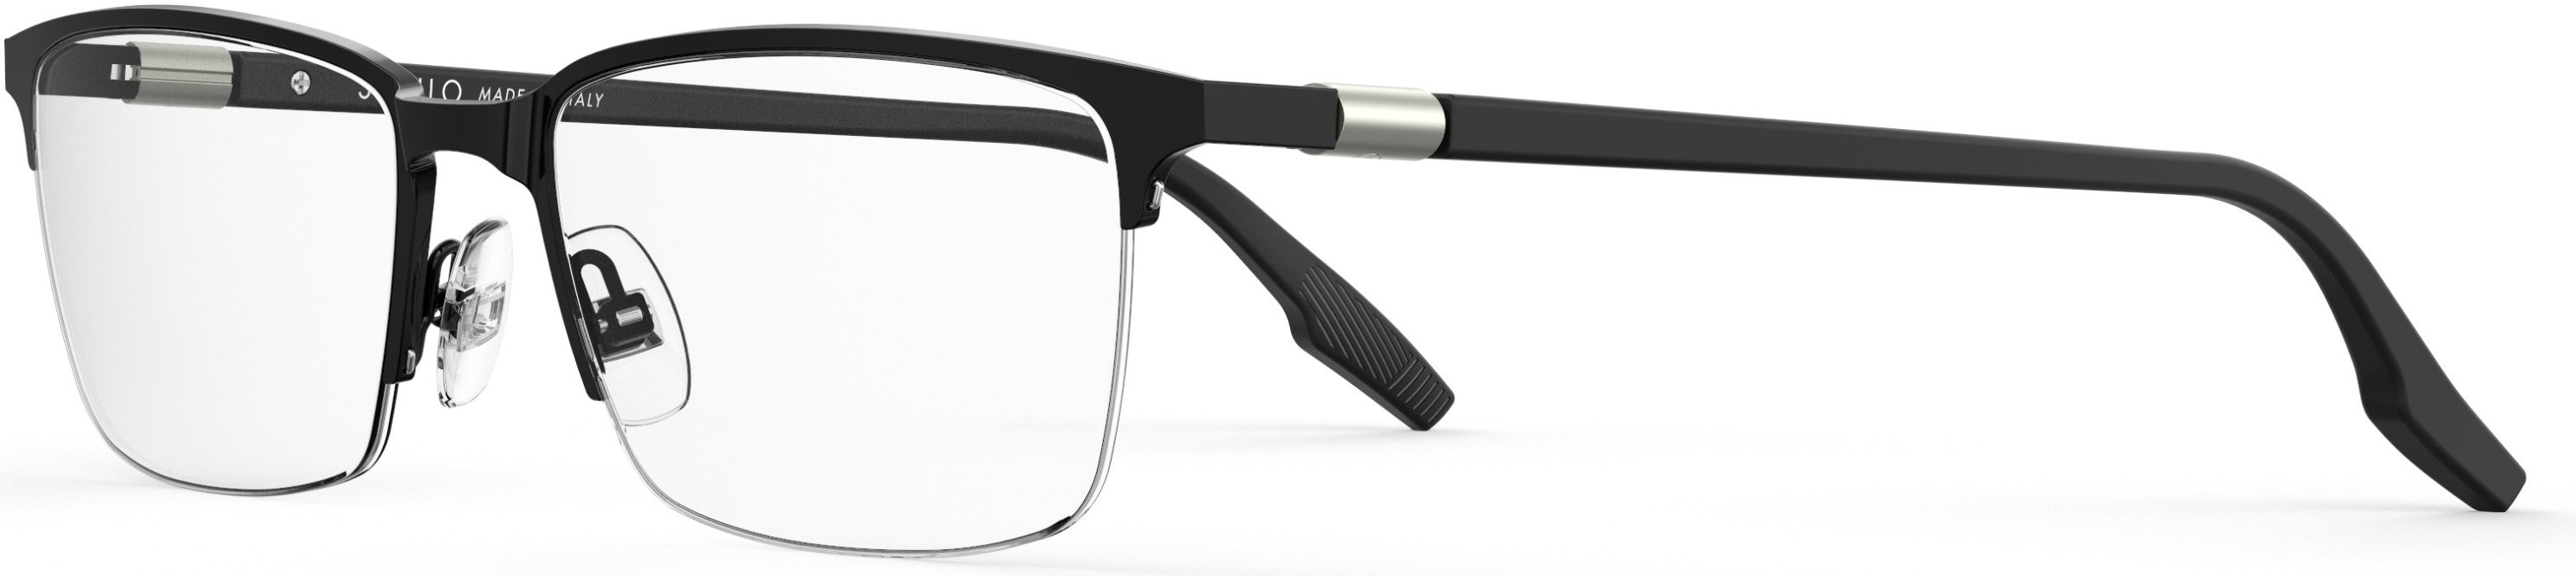 Safilo 2.0 Filo 02 Rectangular Eyeglasses 0003-0003  Matte Black (00 Demo Lens)